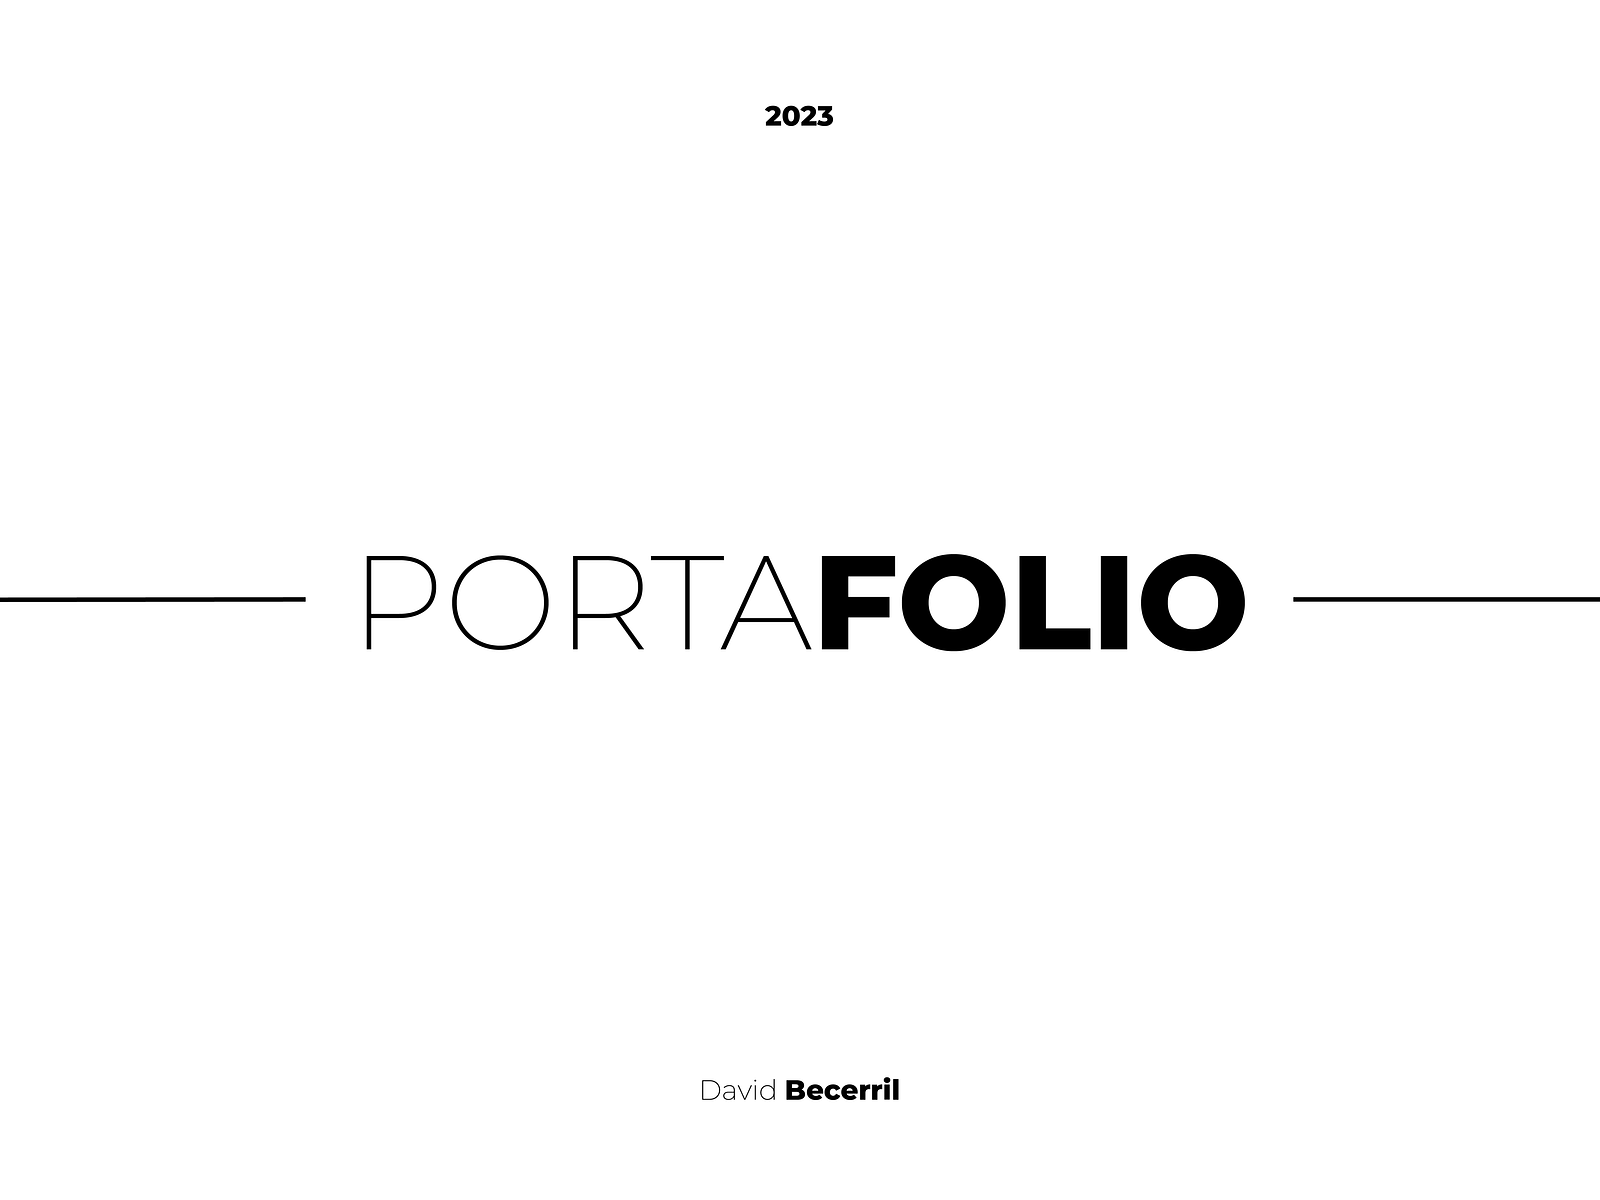 Portafolio 2023 - dmb by David Becerril on Dribbble